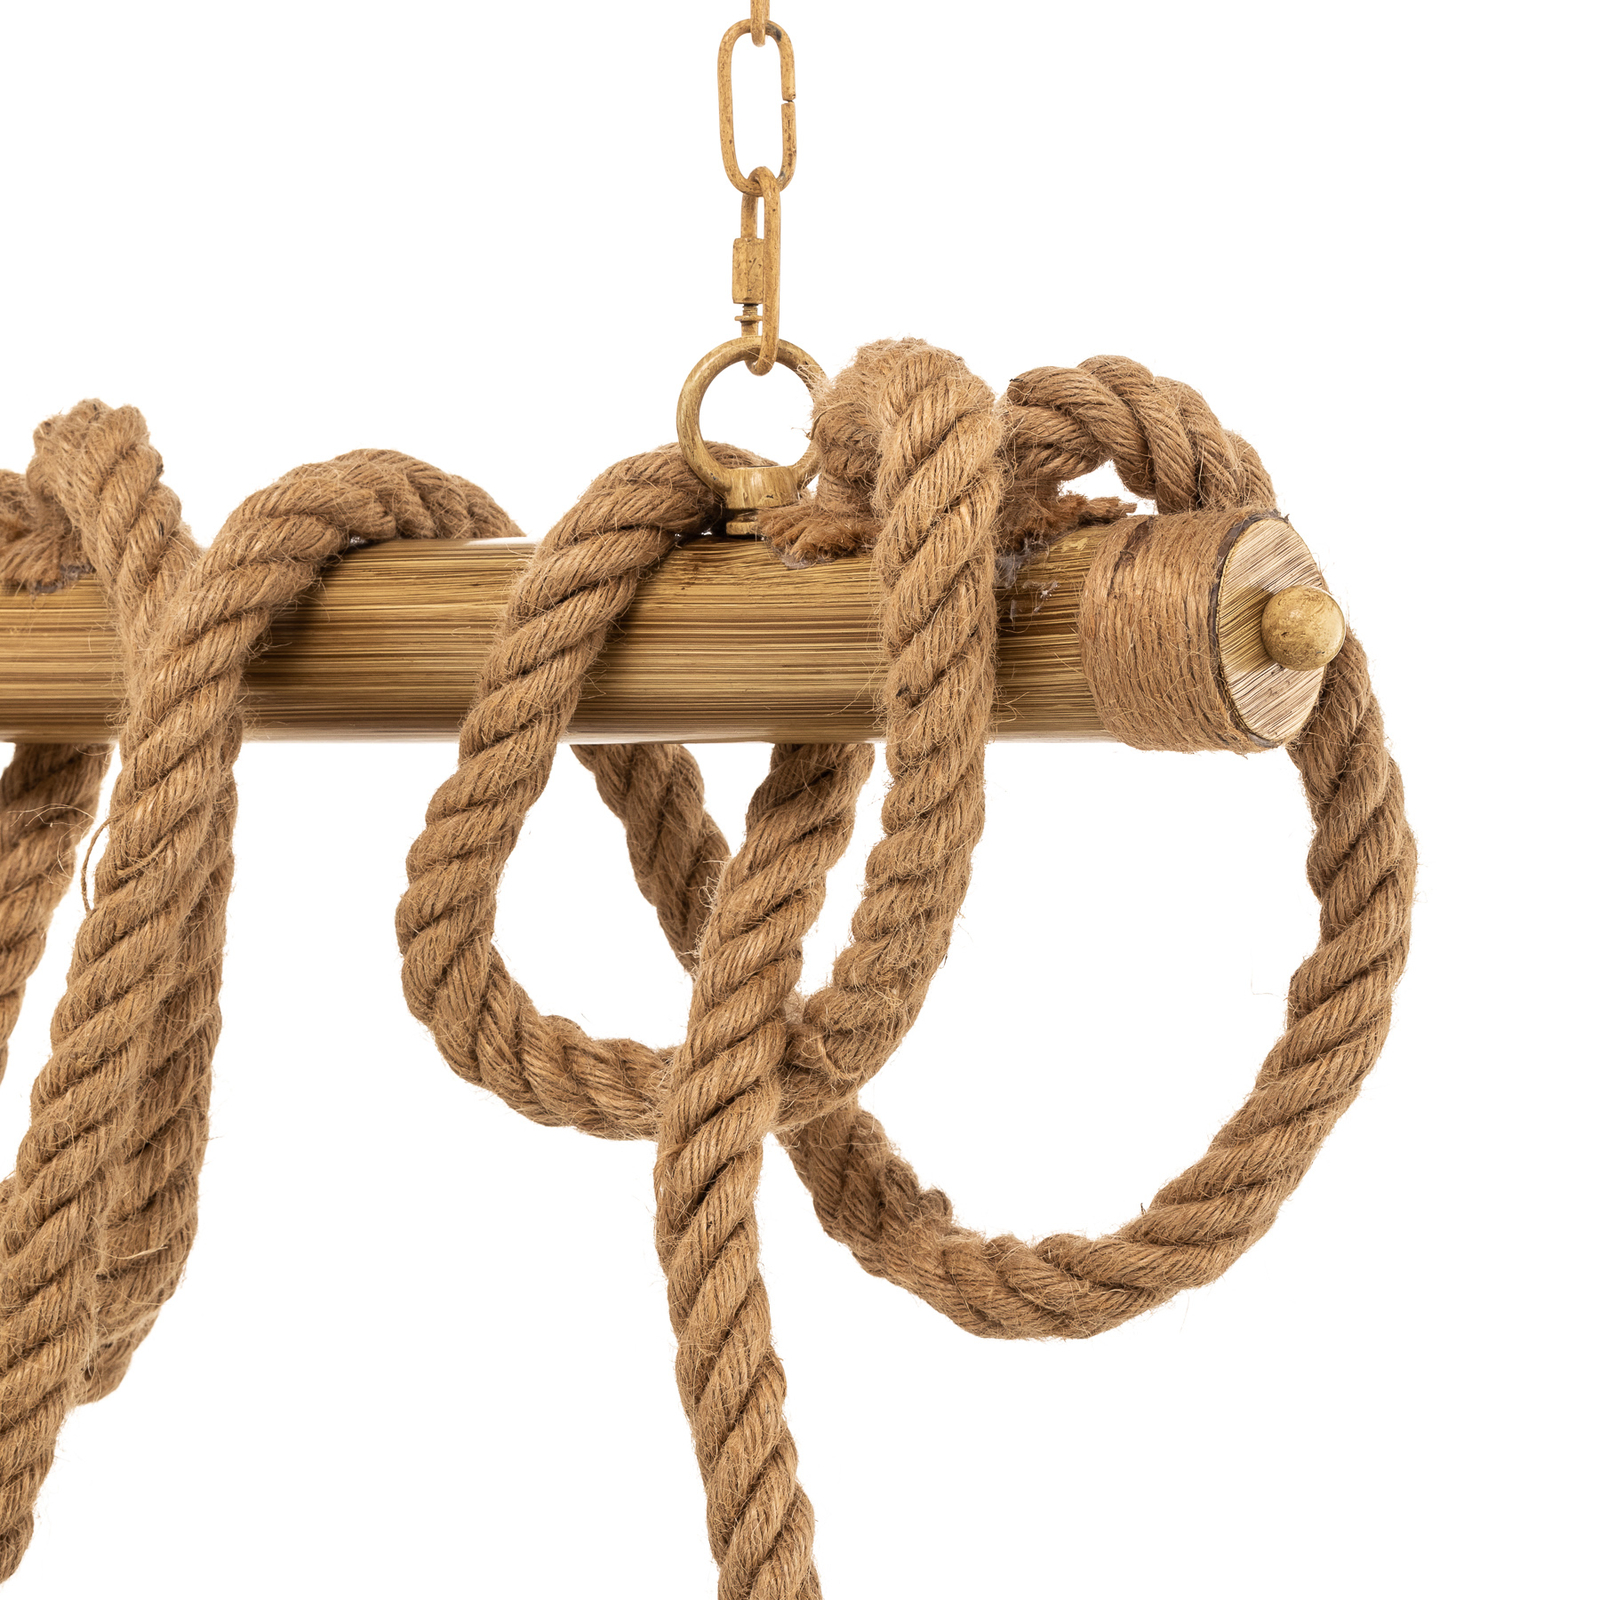 Mauli pendant light made of wood and ropes